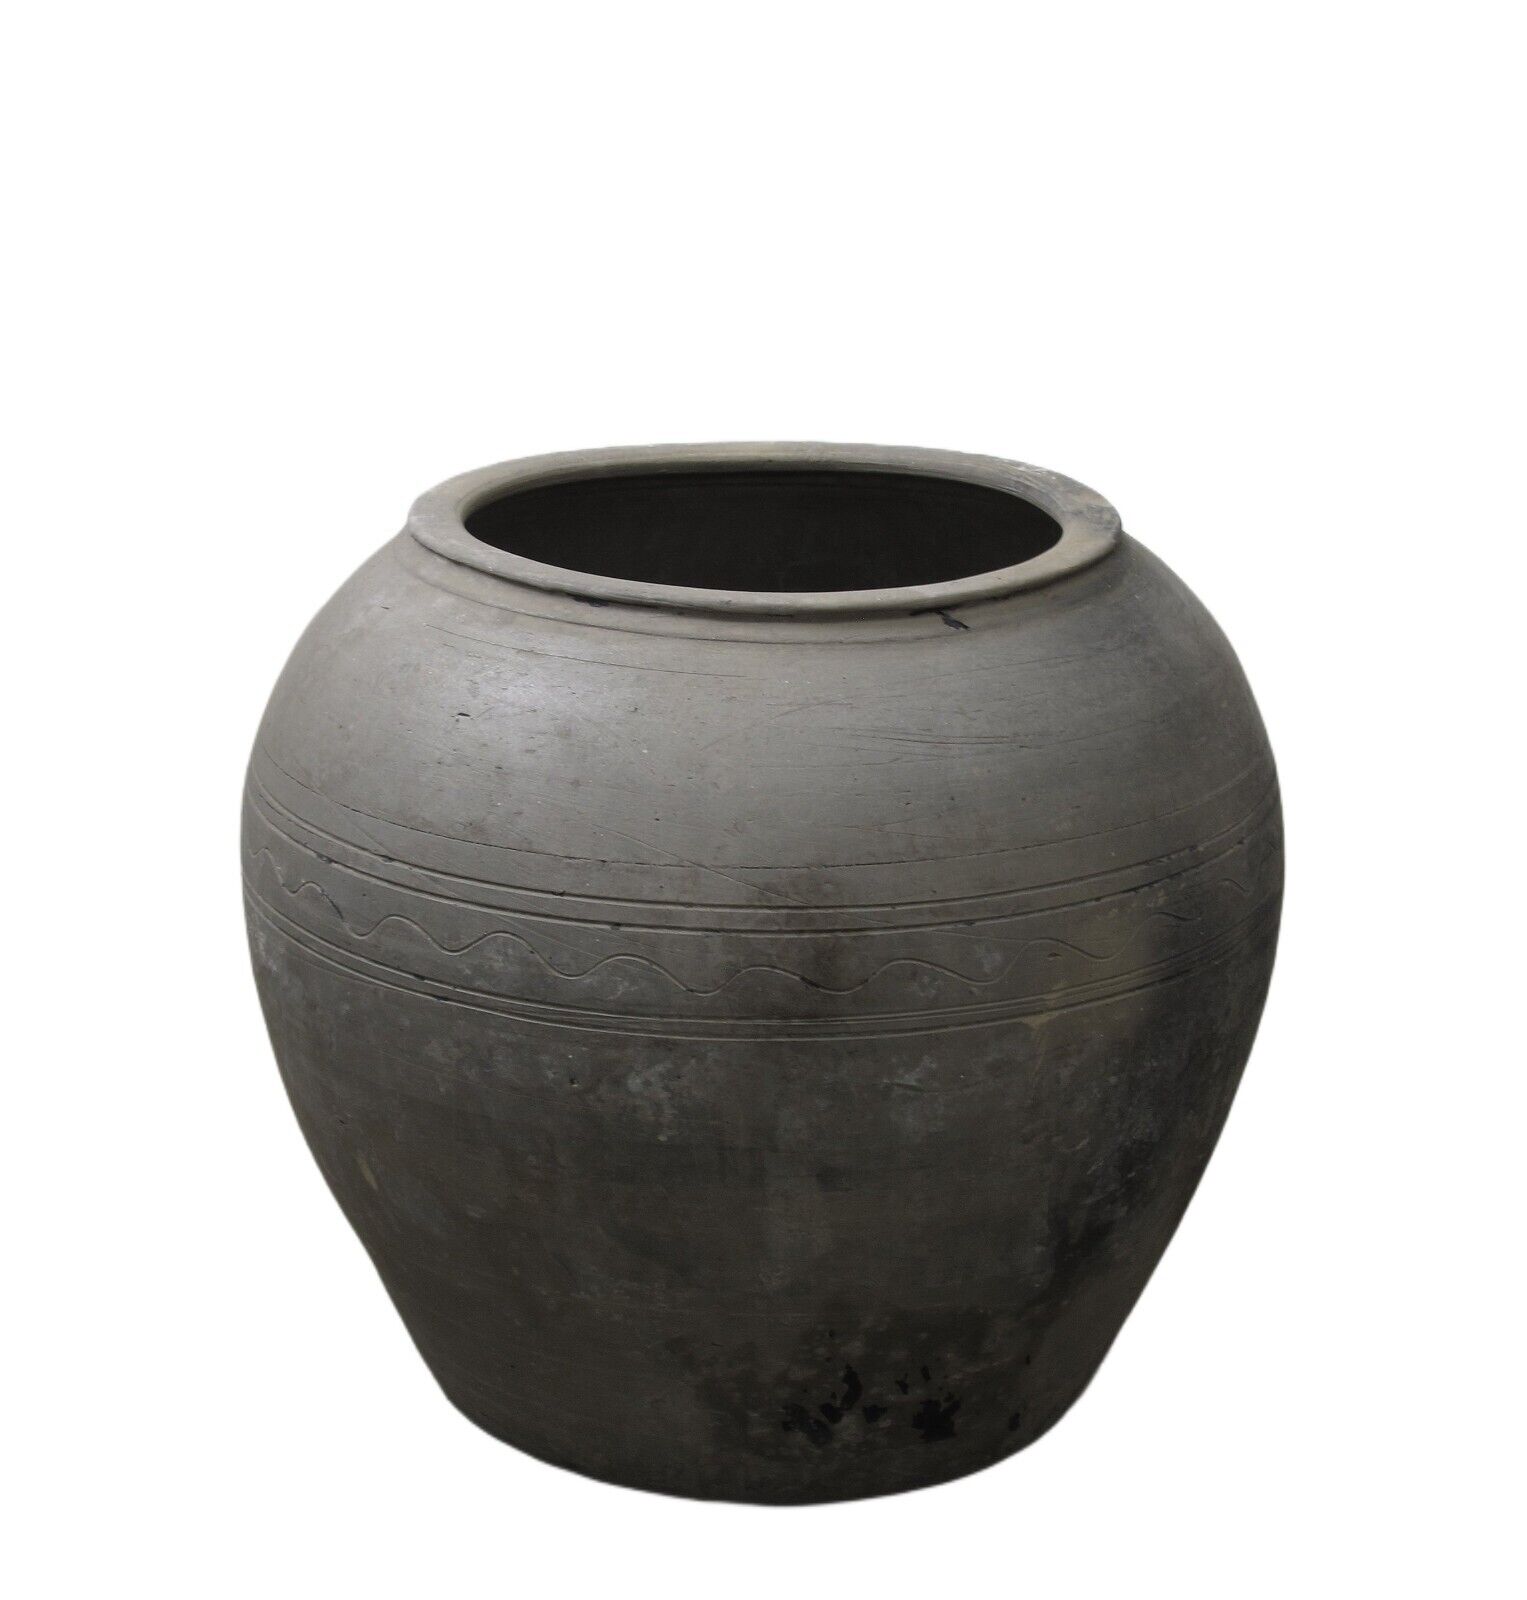 Large Black Grey Earthenware Planter Pot